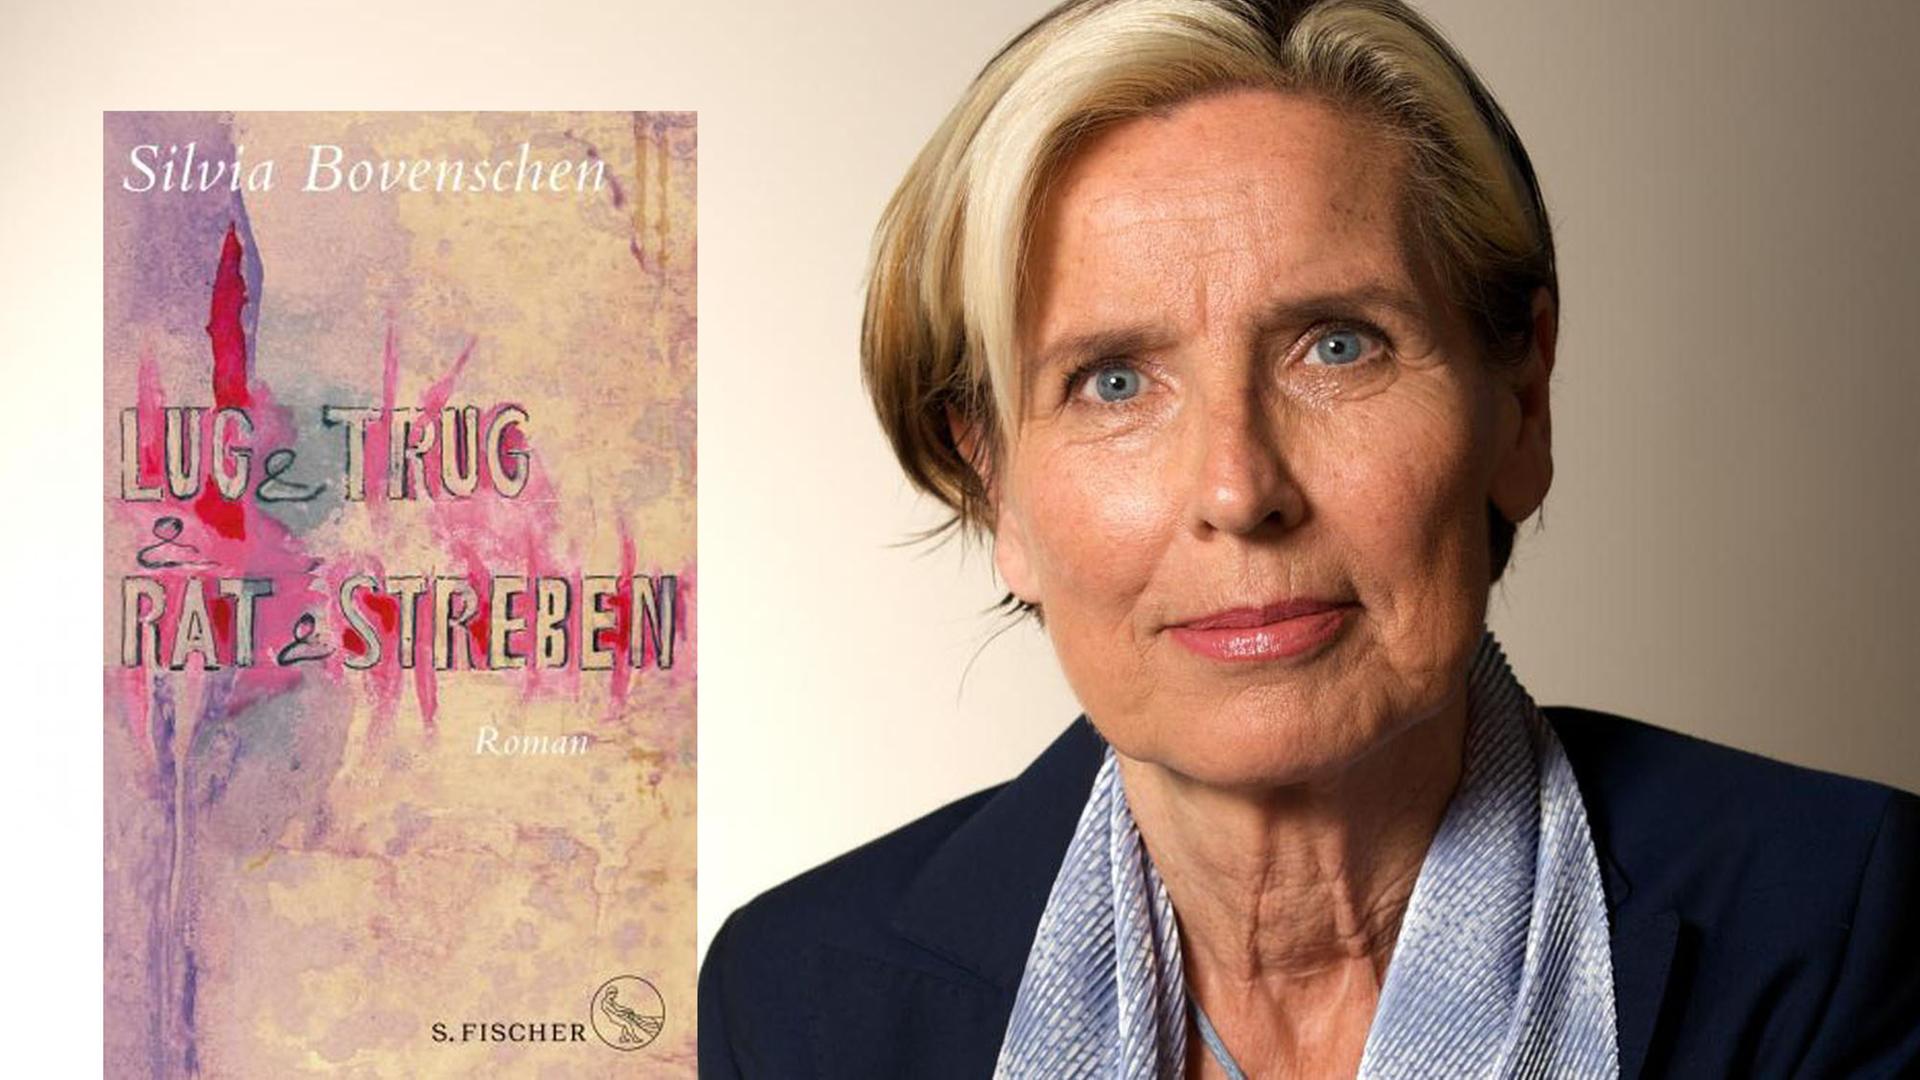 Buchcover Silvia Bovenschen: "Lug&Trug&Rat&Streben"